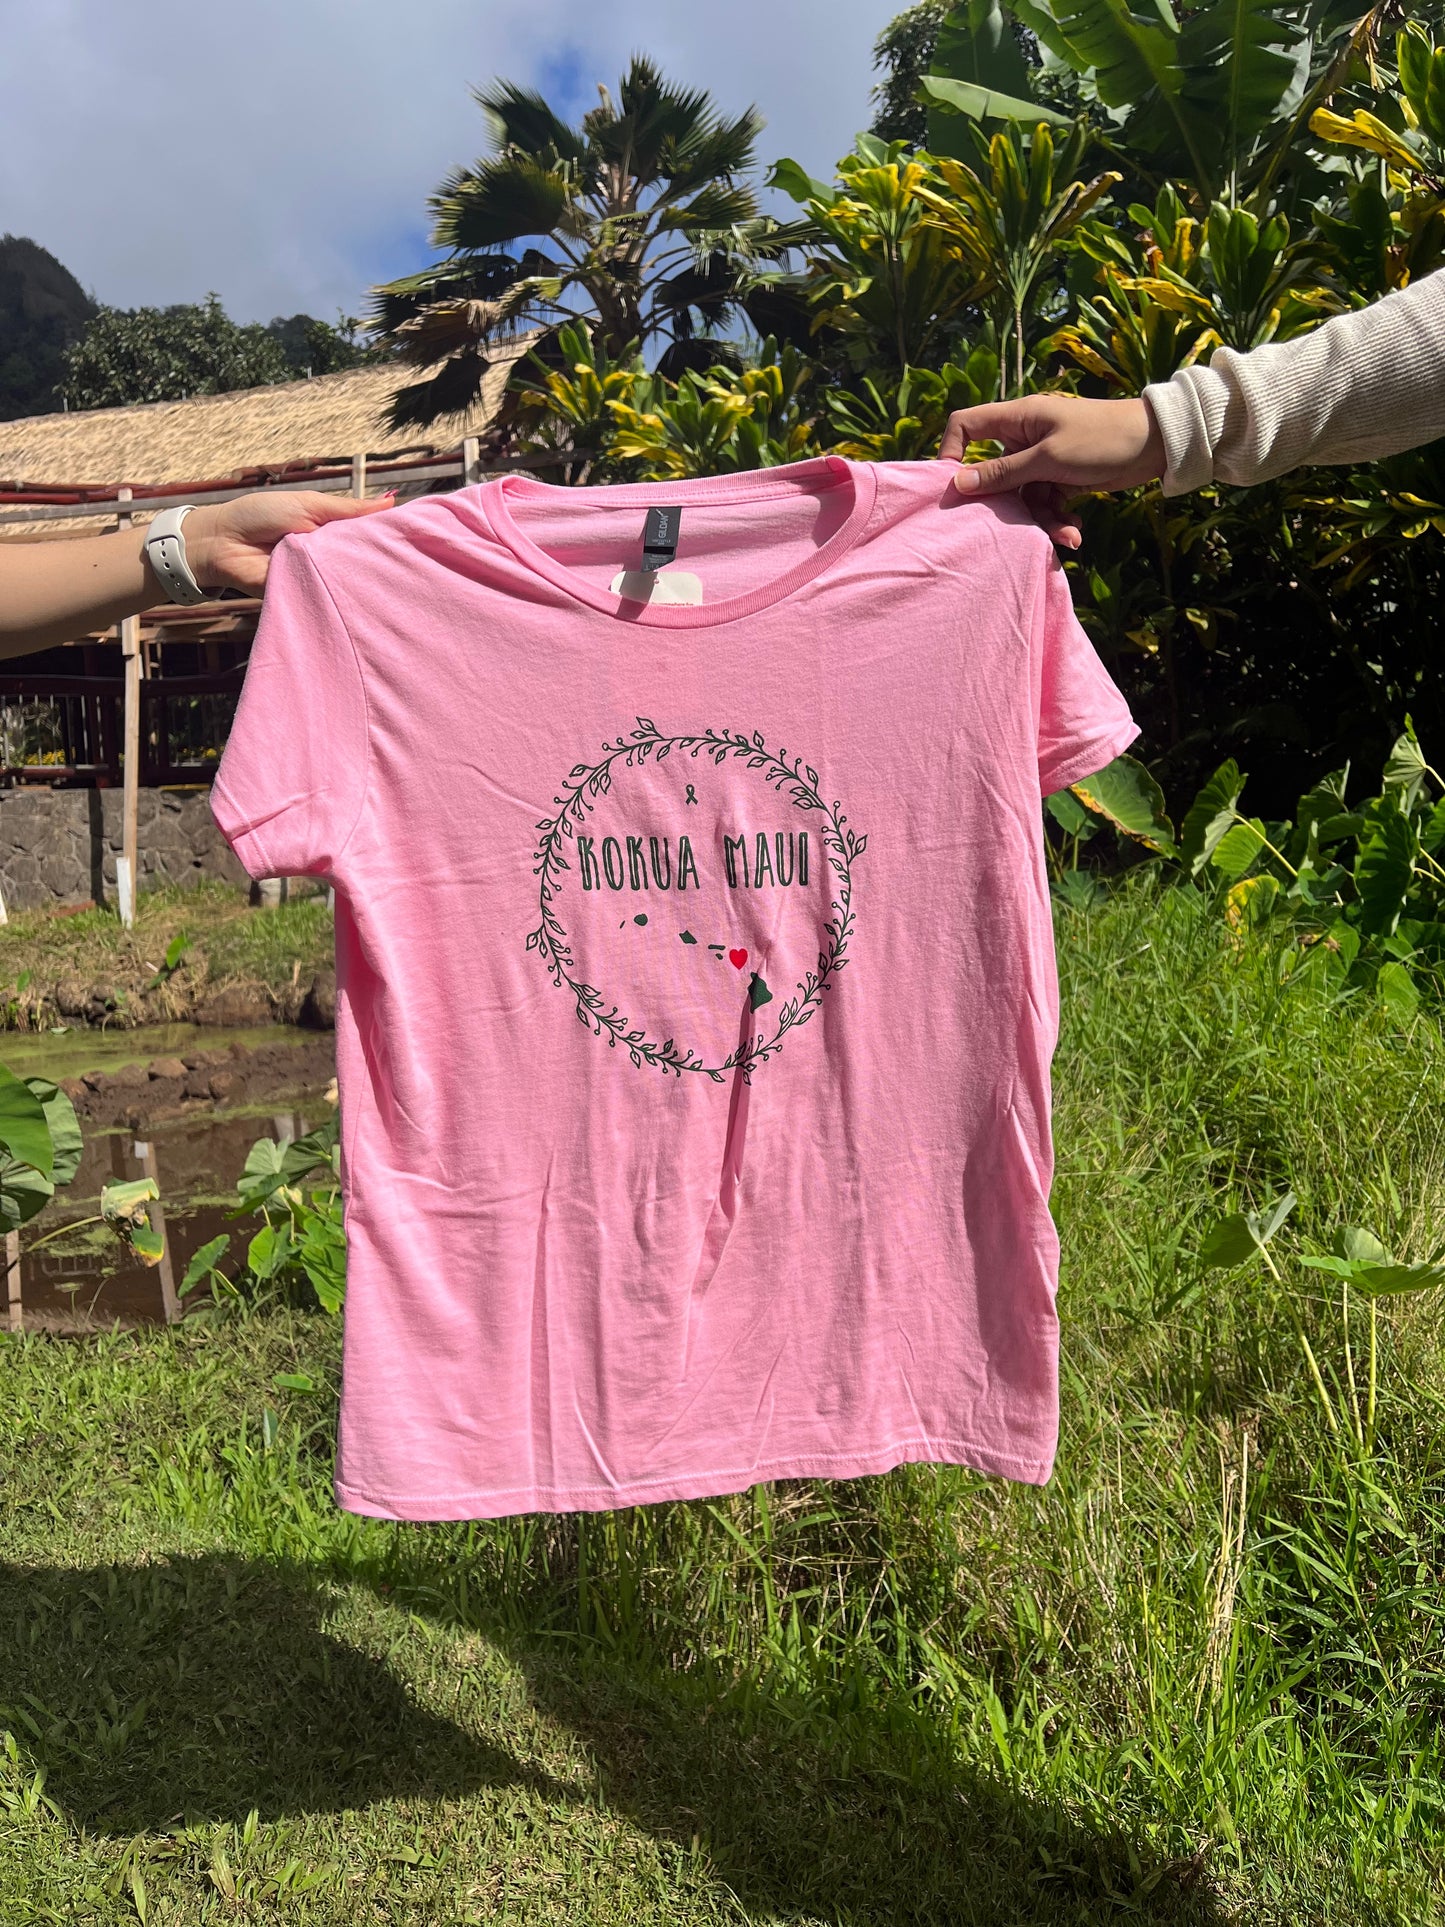 KOKUA MAUI T-SHIRT (Pink Women's Short-Sleeve)